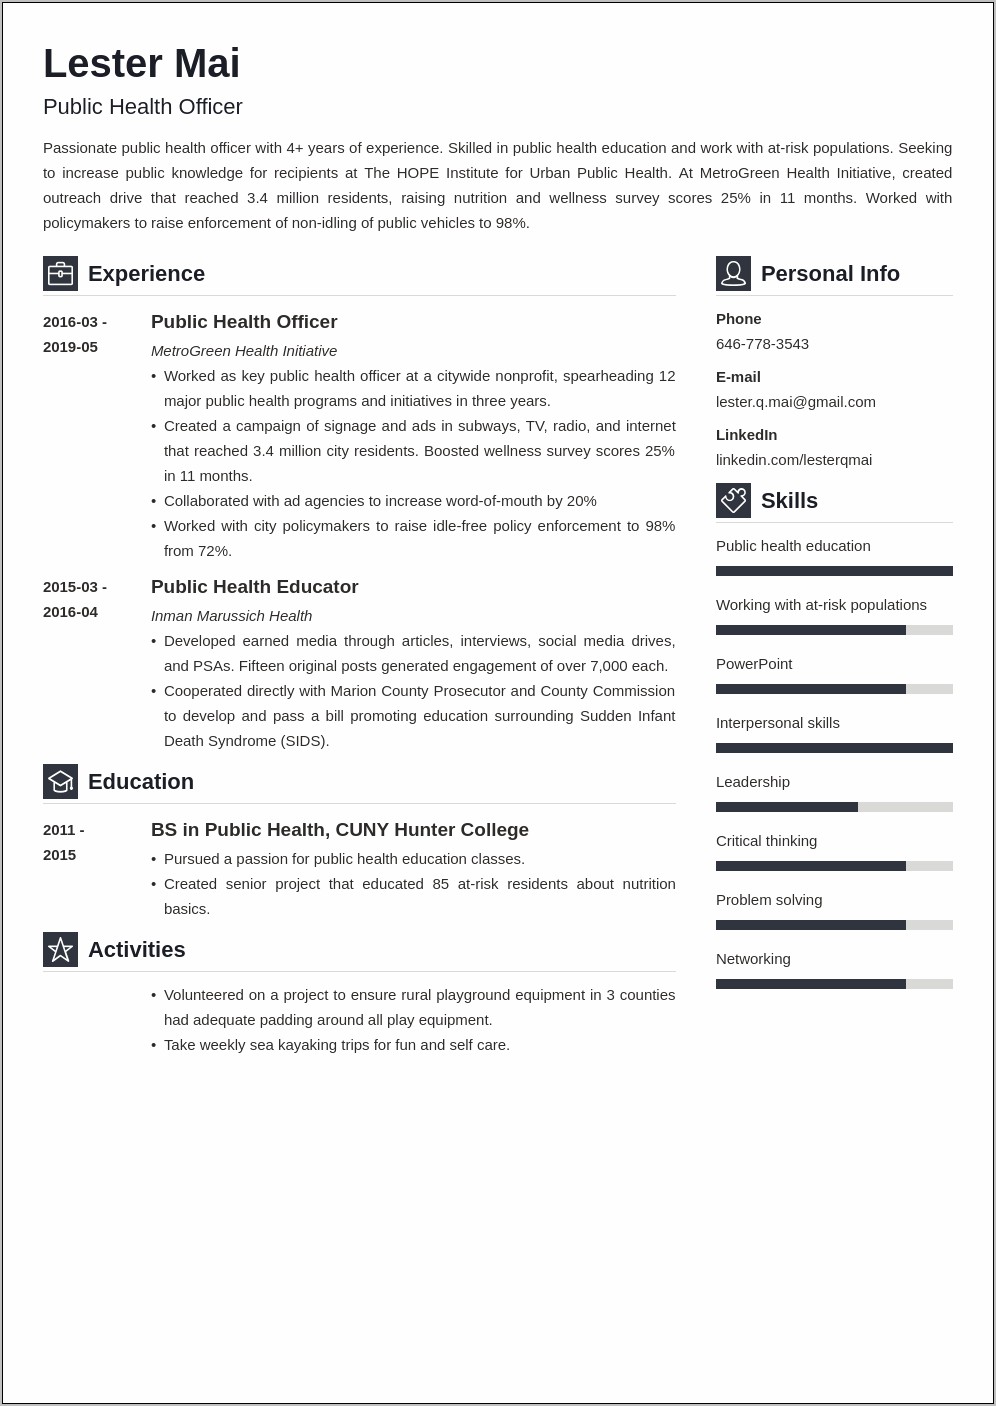 Resume Profile Summary Of Public Health